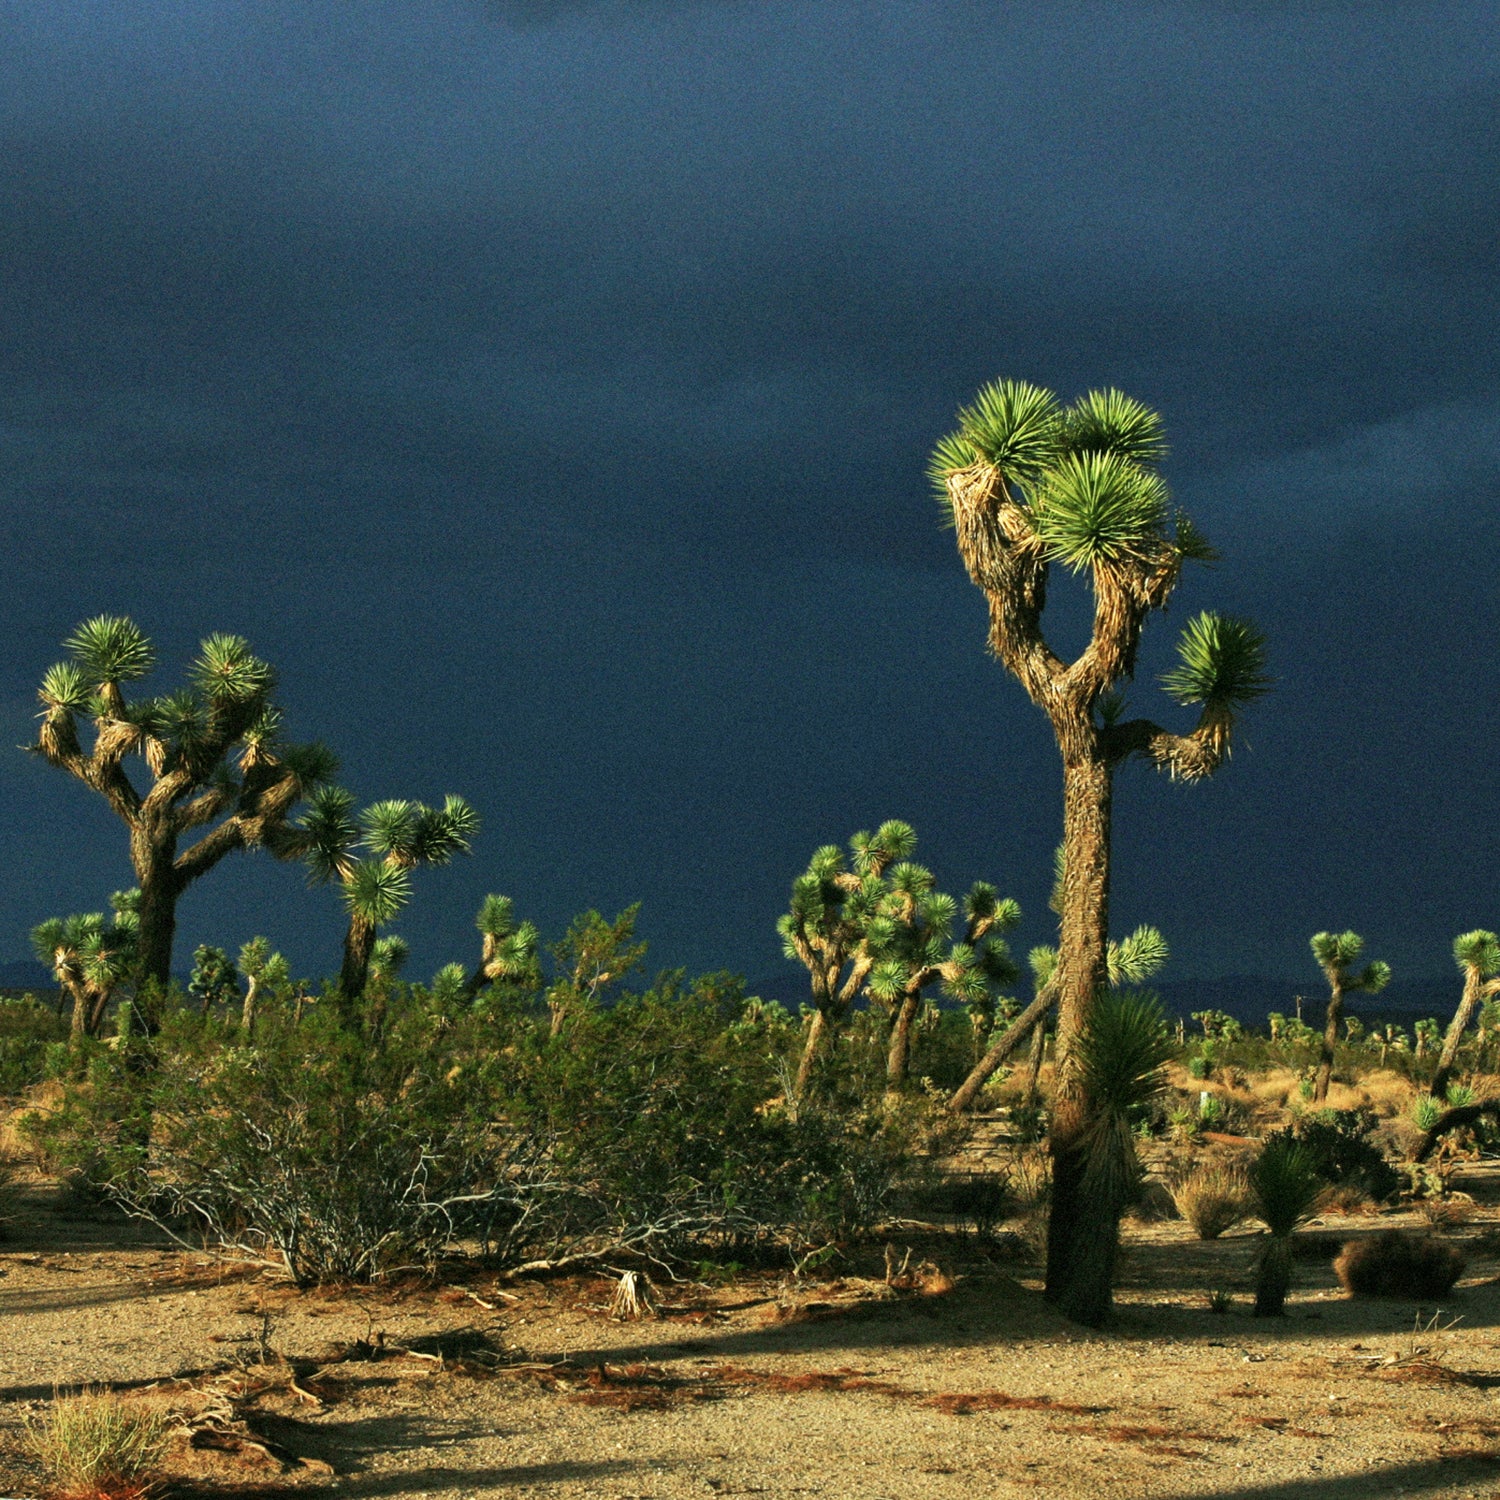 Dead Bodies in the Desert: Searching for Adventure near Las Vegas